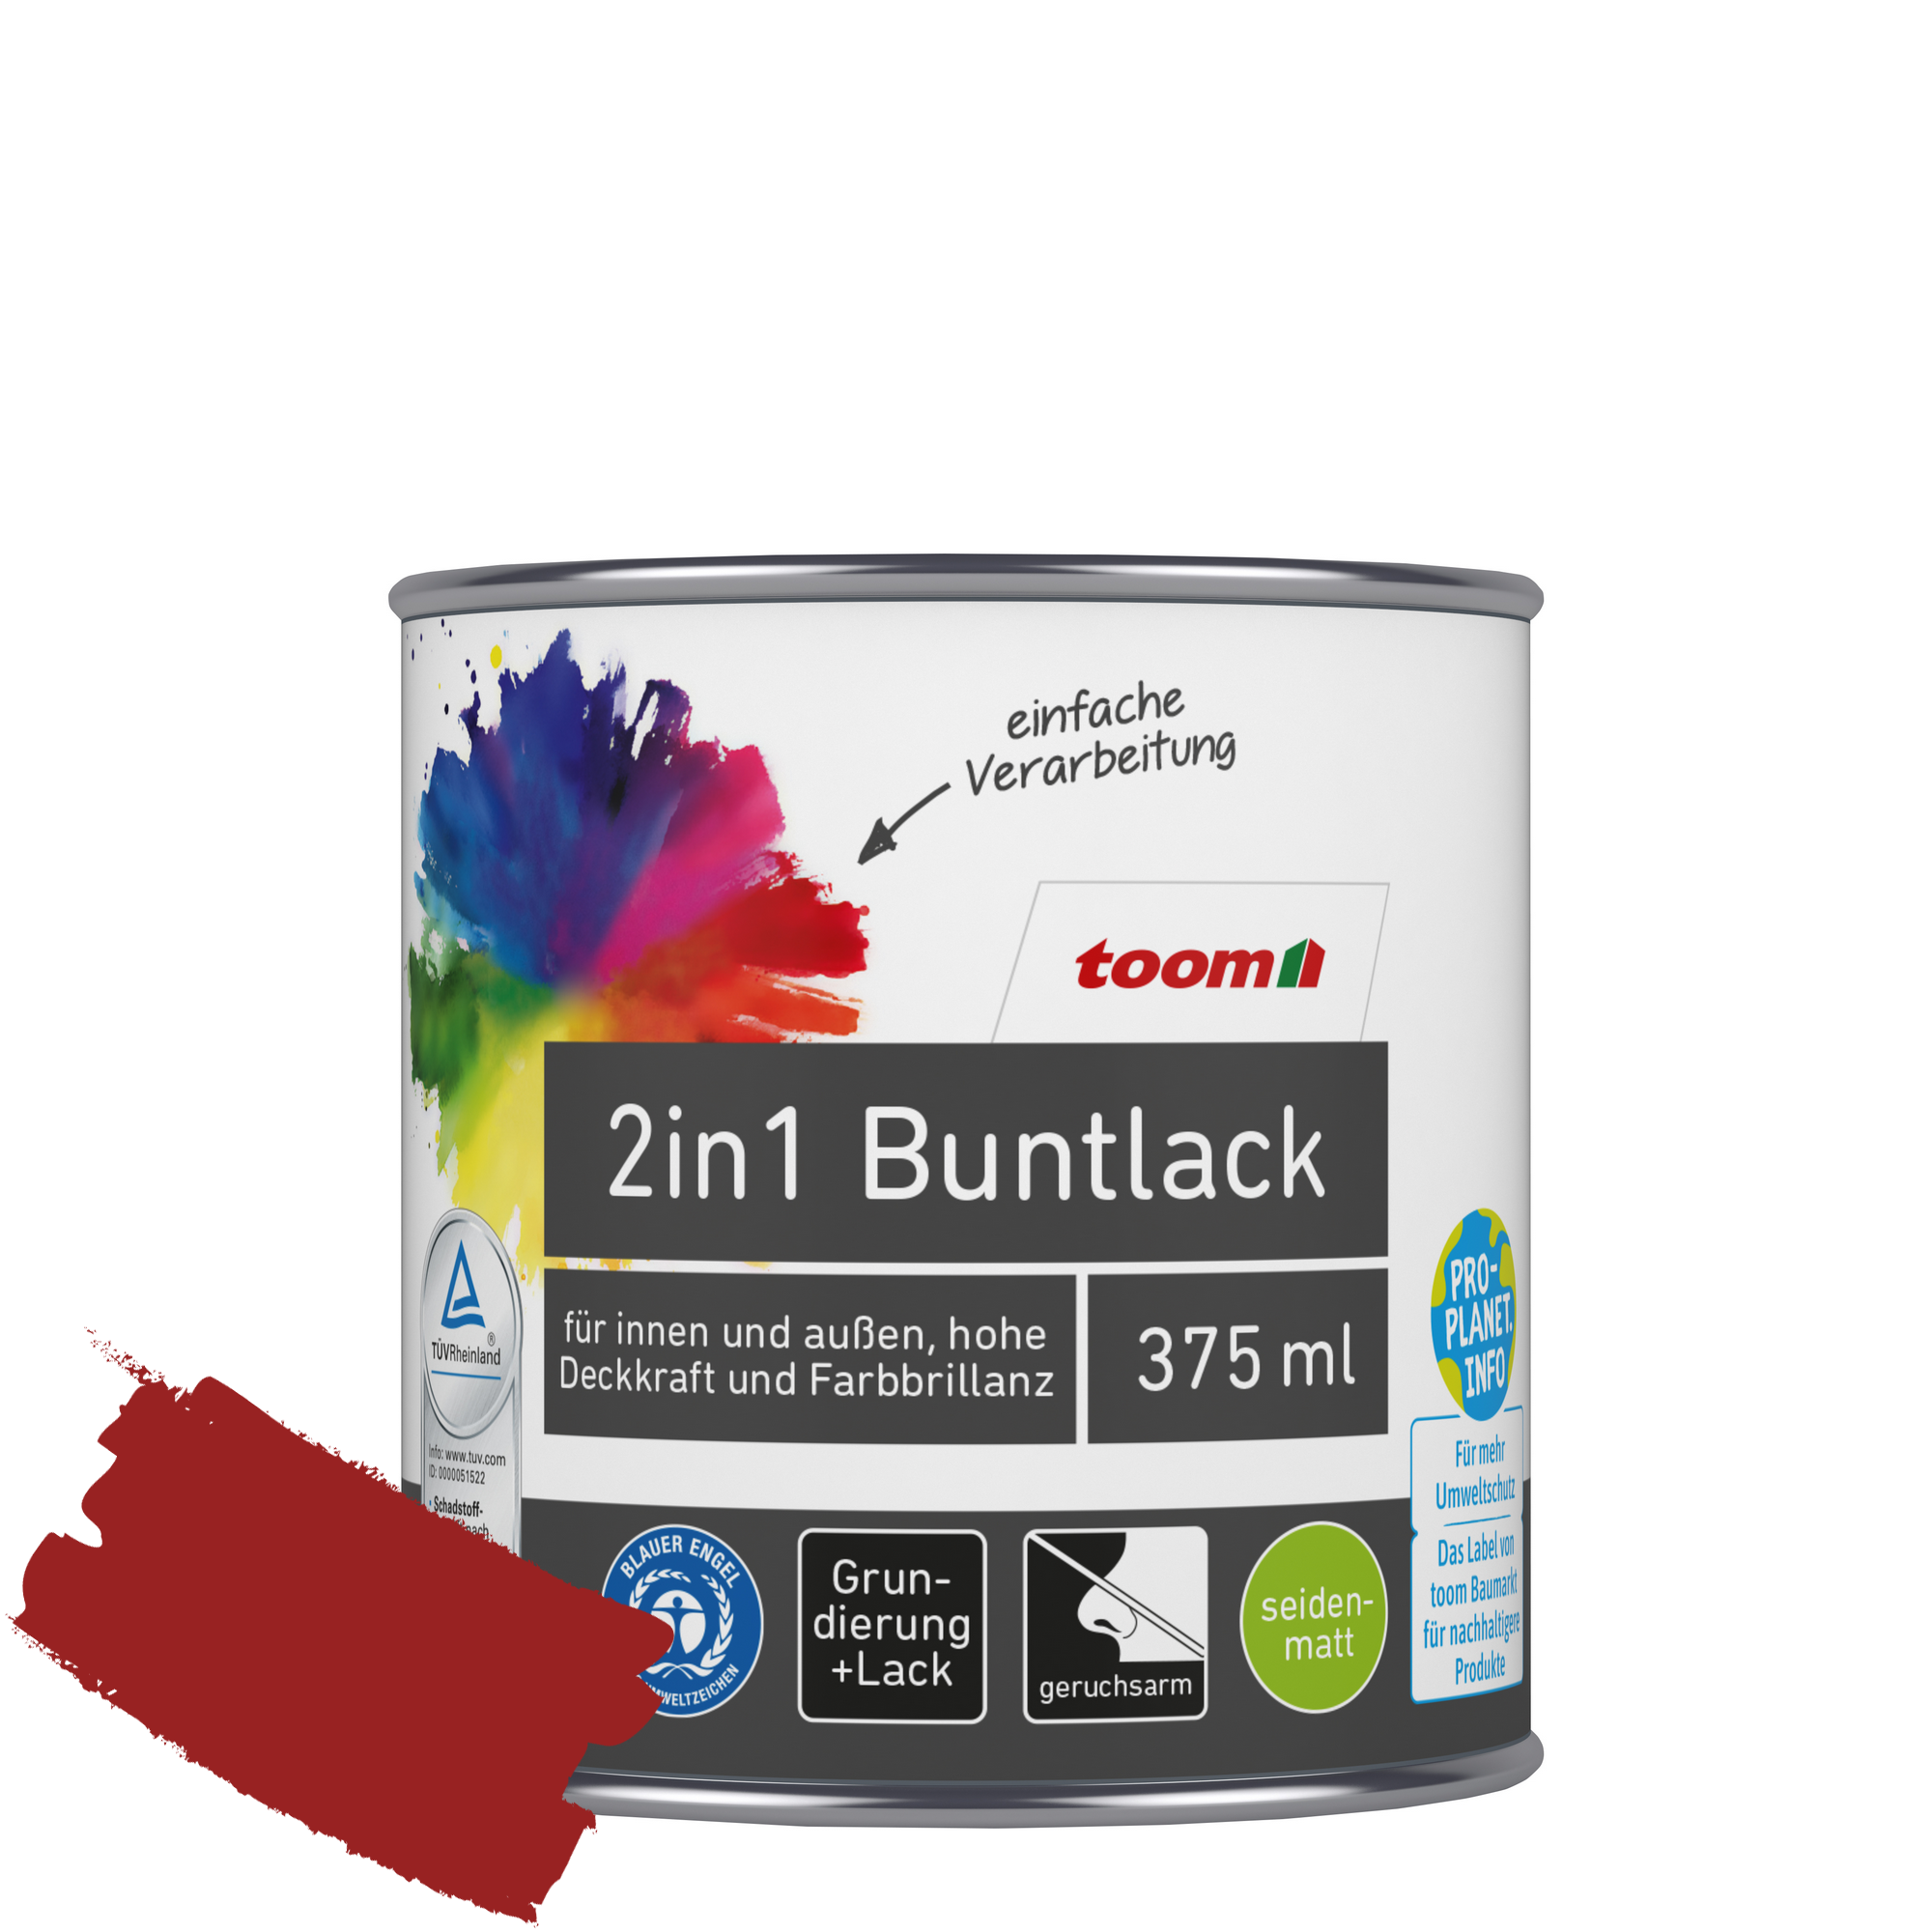 2in1 Buntlack 'Mohnblume' feuerrot seidenmatt 375 ml + product picture